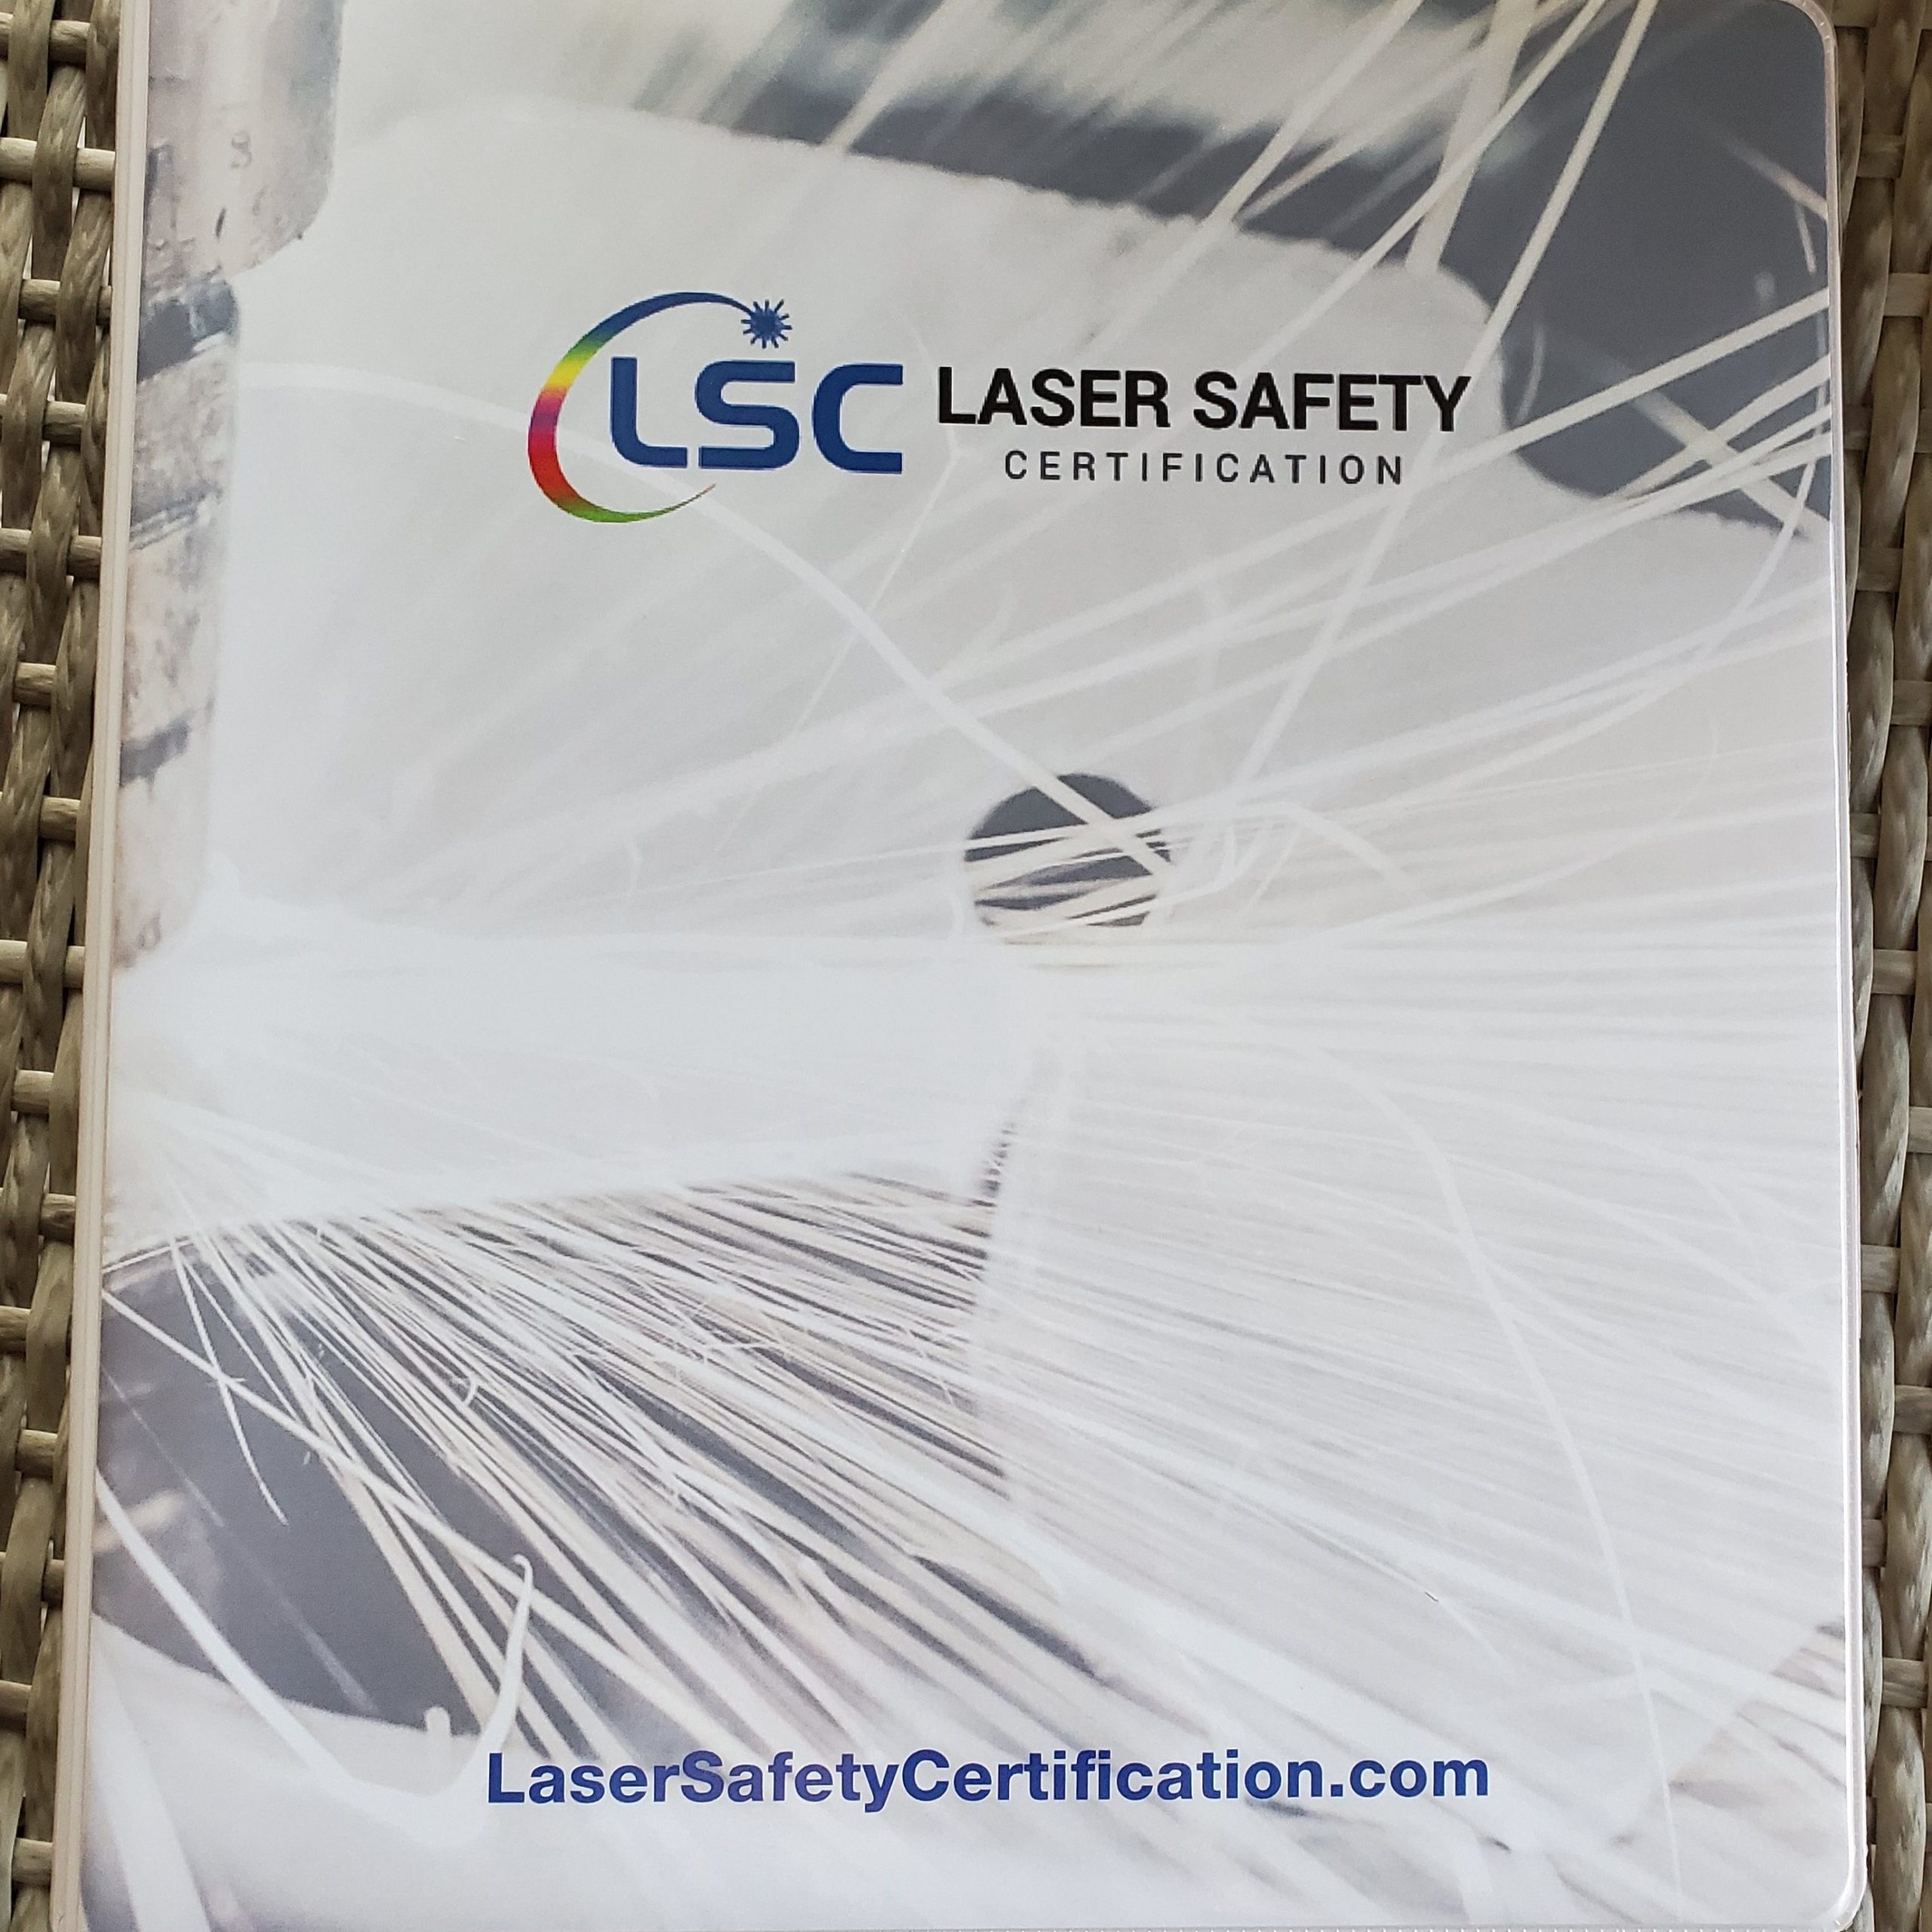 Our Laser Safety Kits offer a comprehensive Laser Safety training and certification program